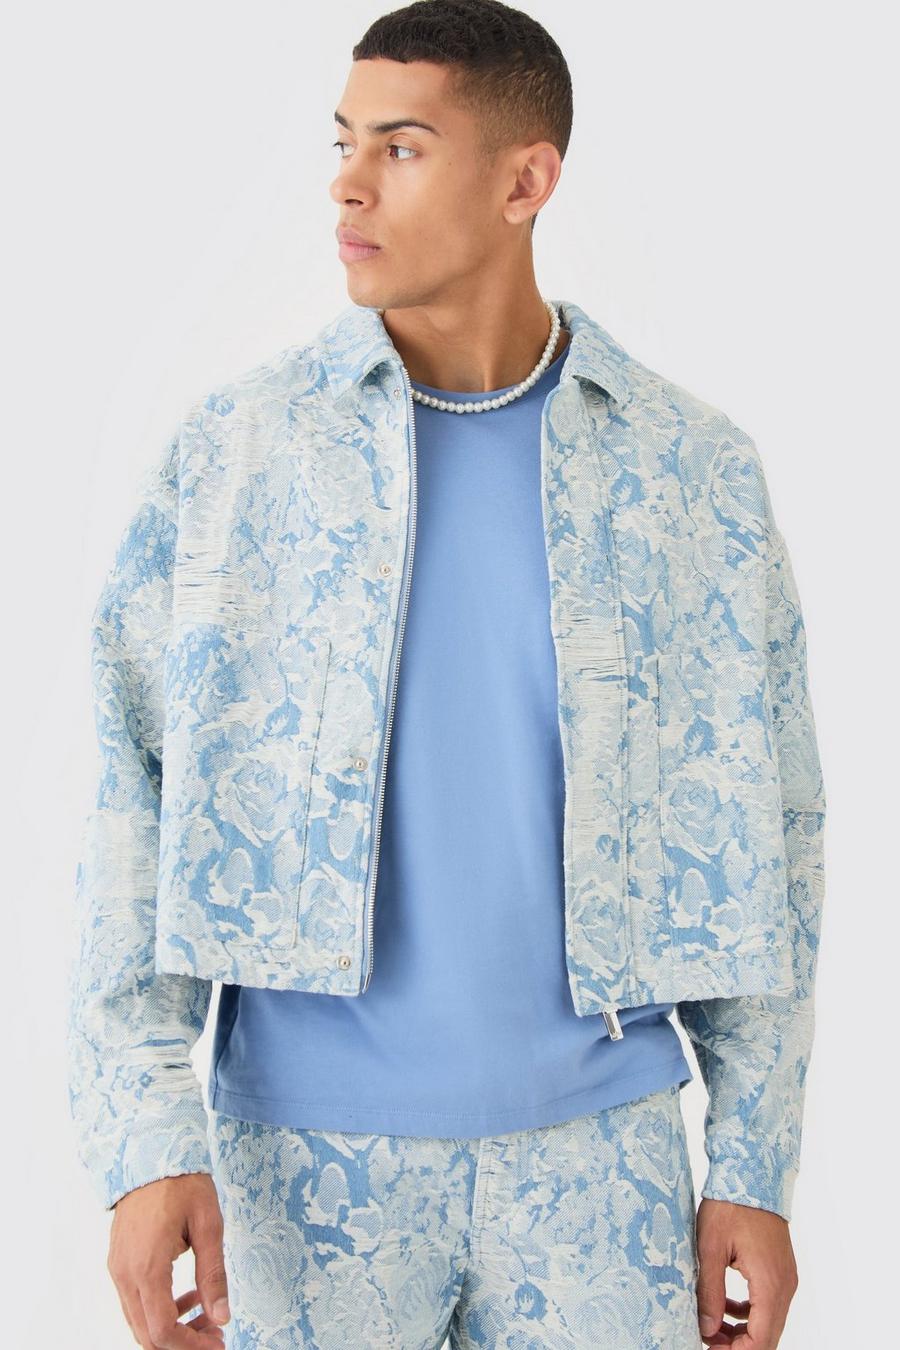 Light blue Boxy Fit Fabric Interest Distressed Denim Jacket